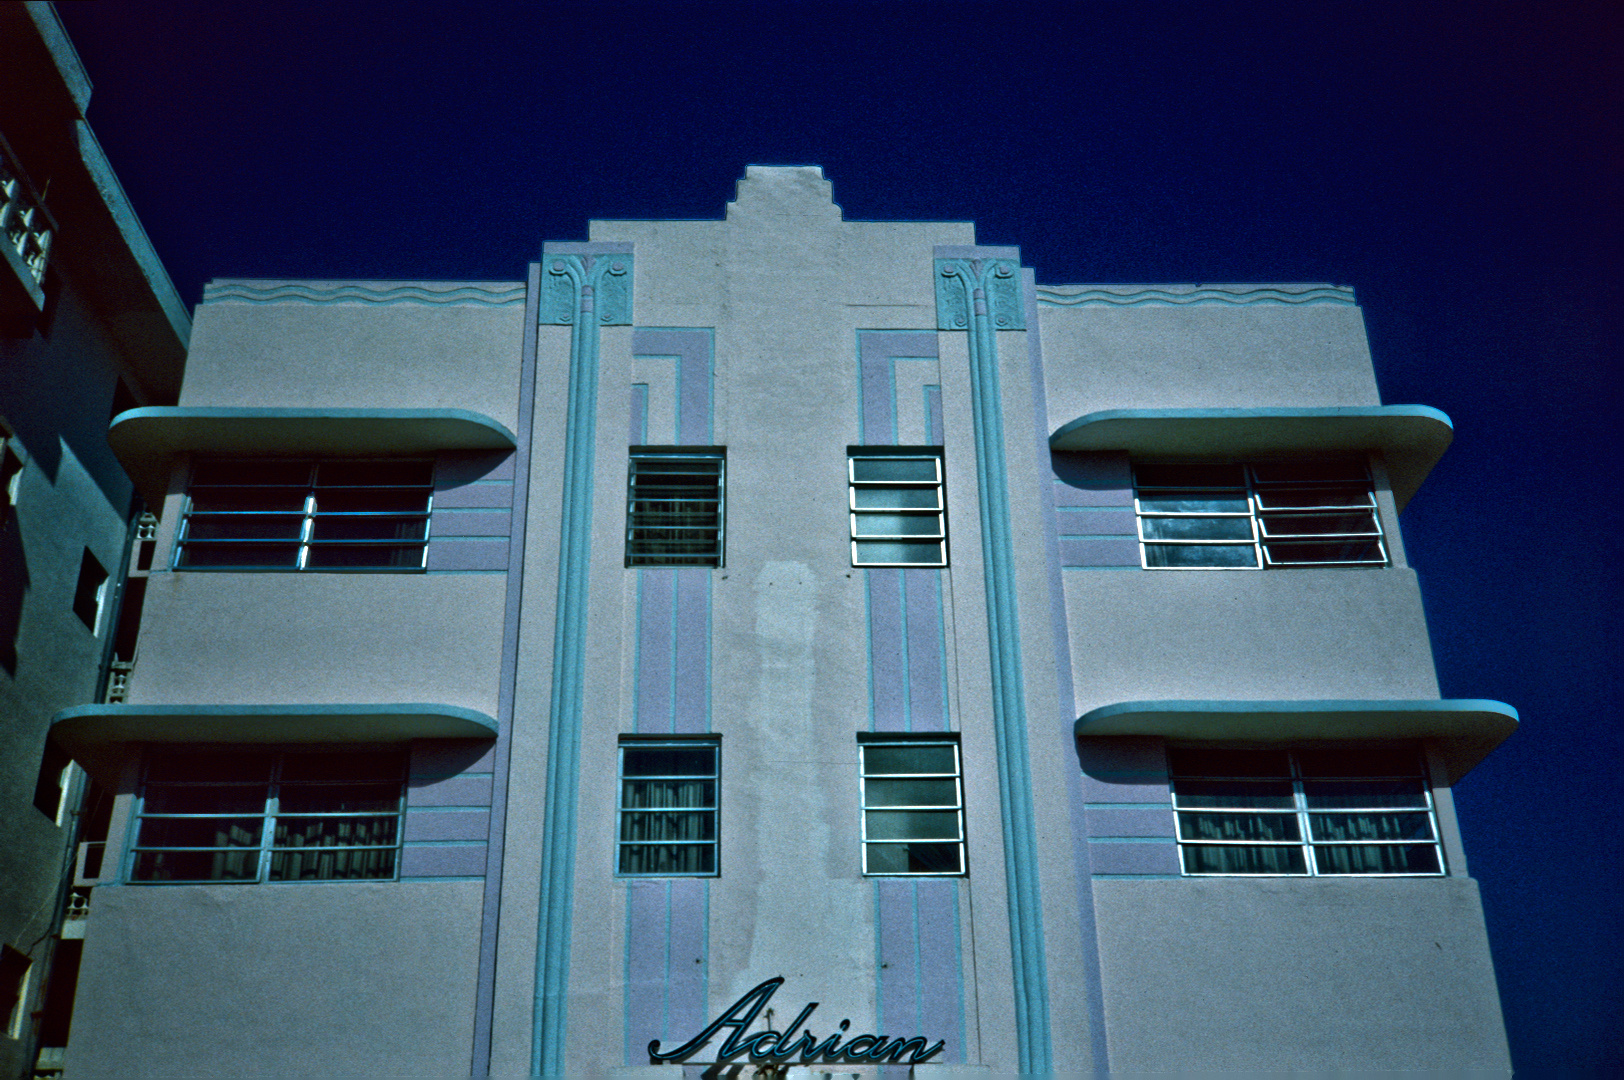 Miami Beach, FL - 1989